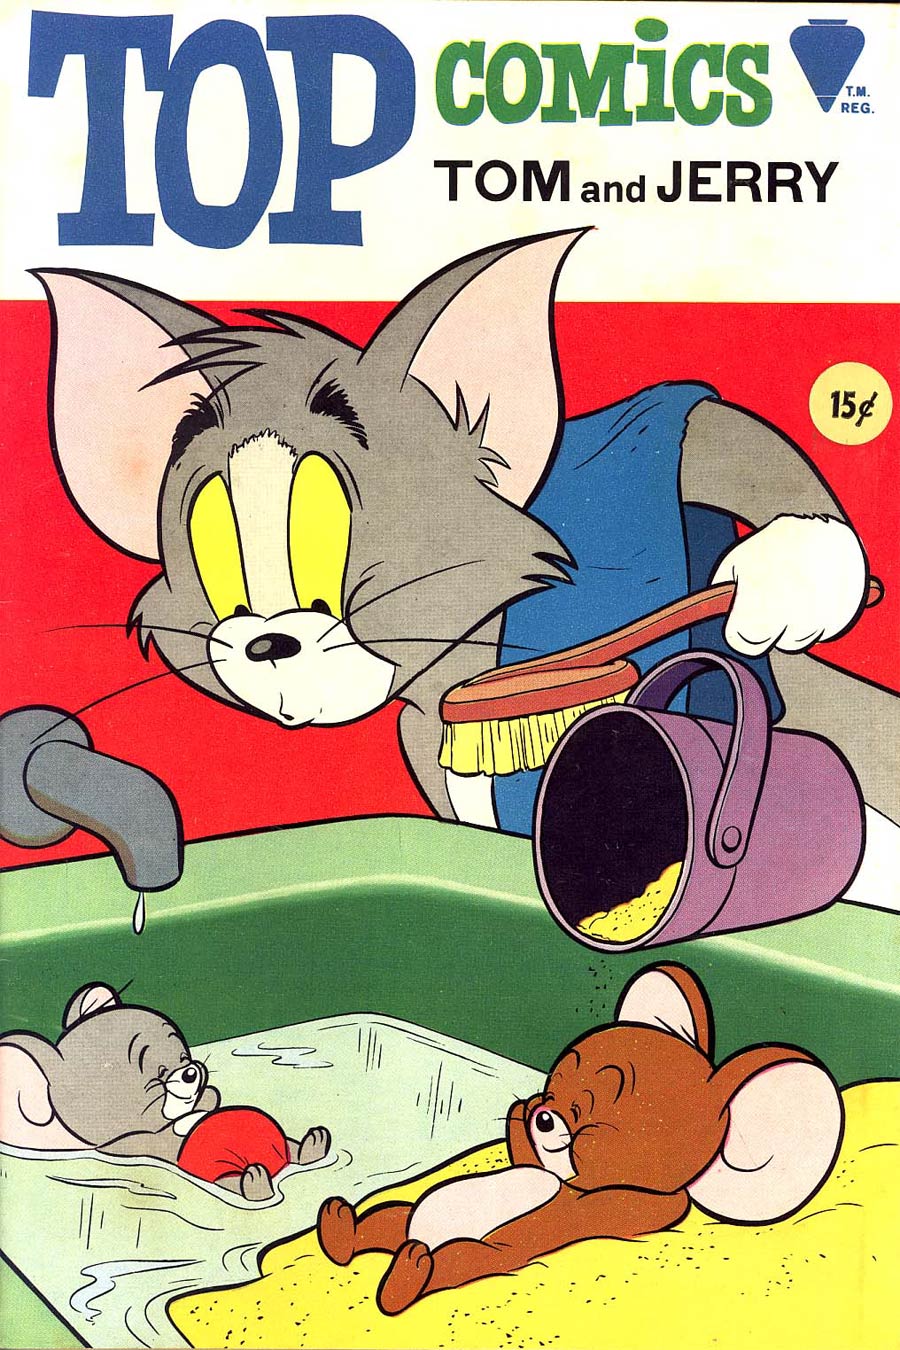 Top Comics #3 Tom and Jerry